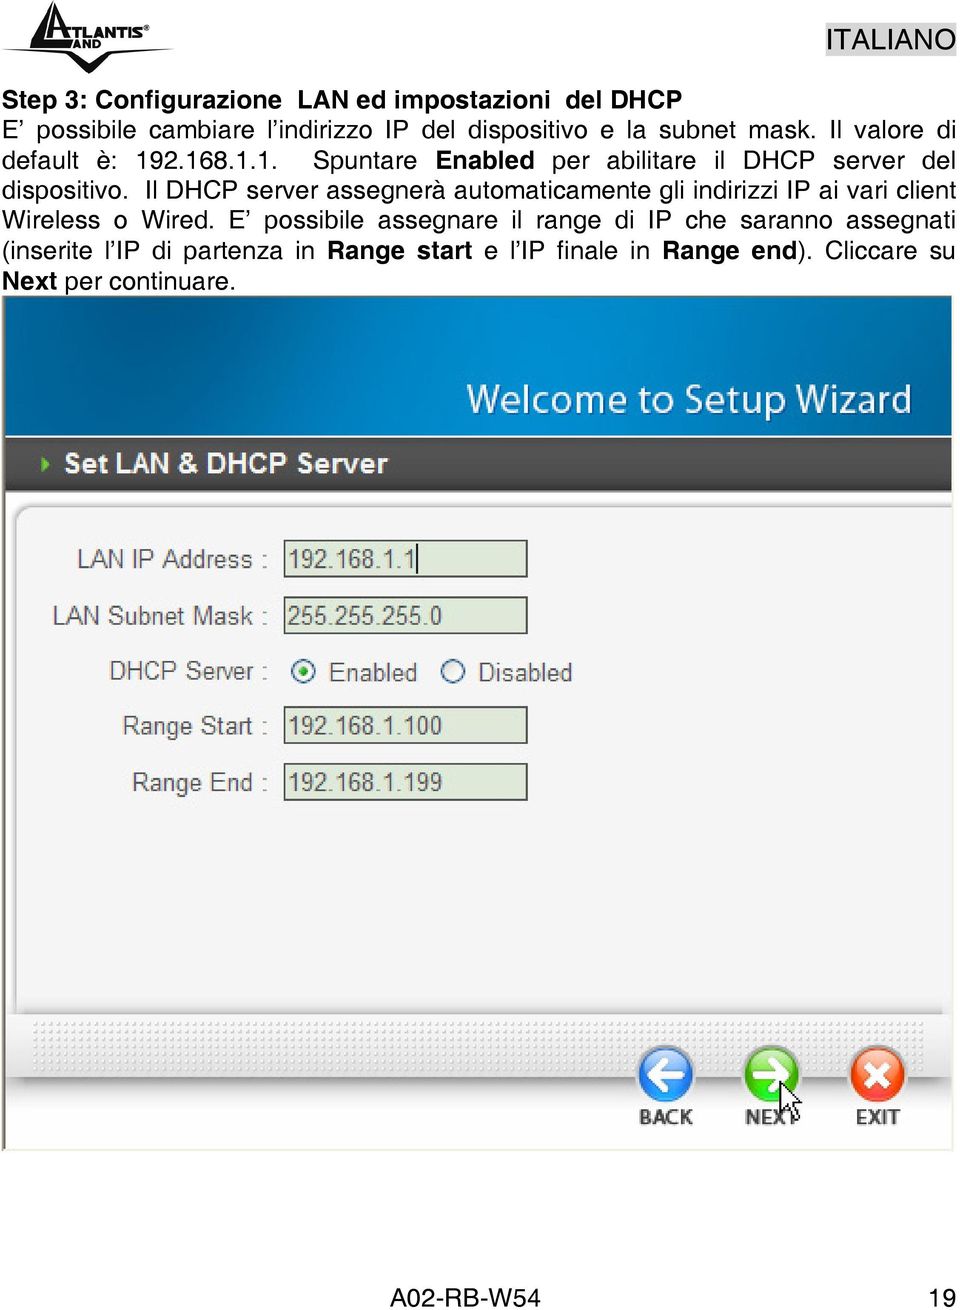 Il DHCP server assegnerà automaticamente gli indirizzi IP ai vari client Wireless o Wired.